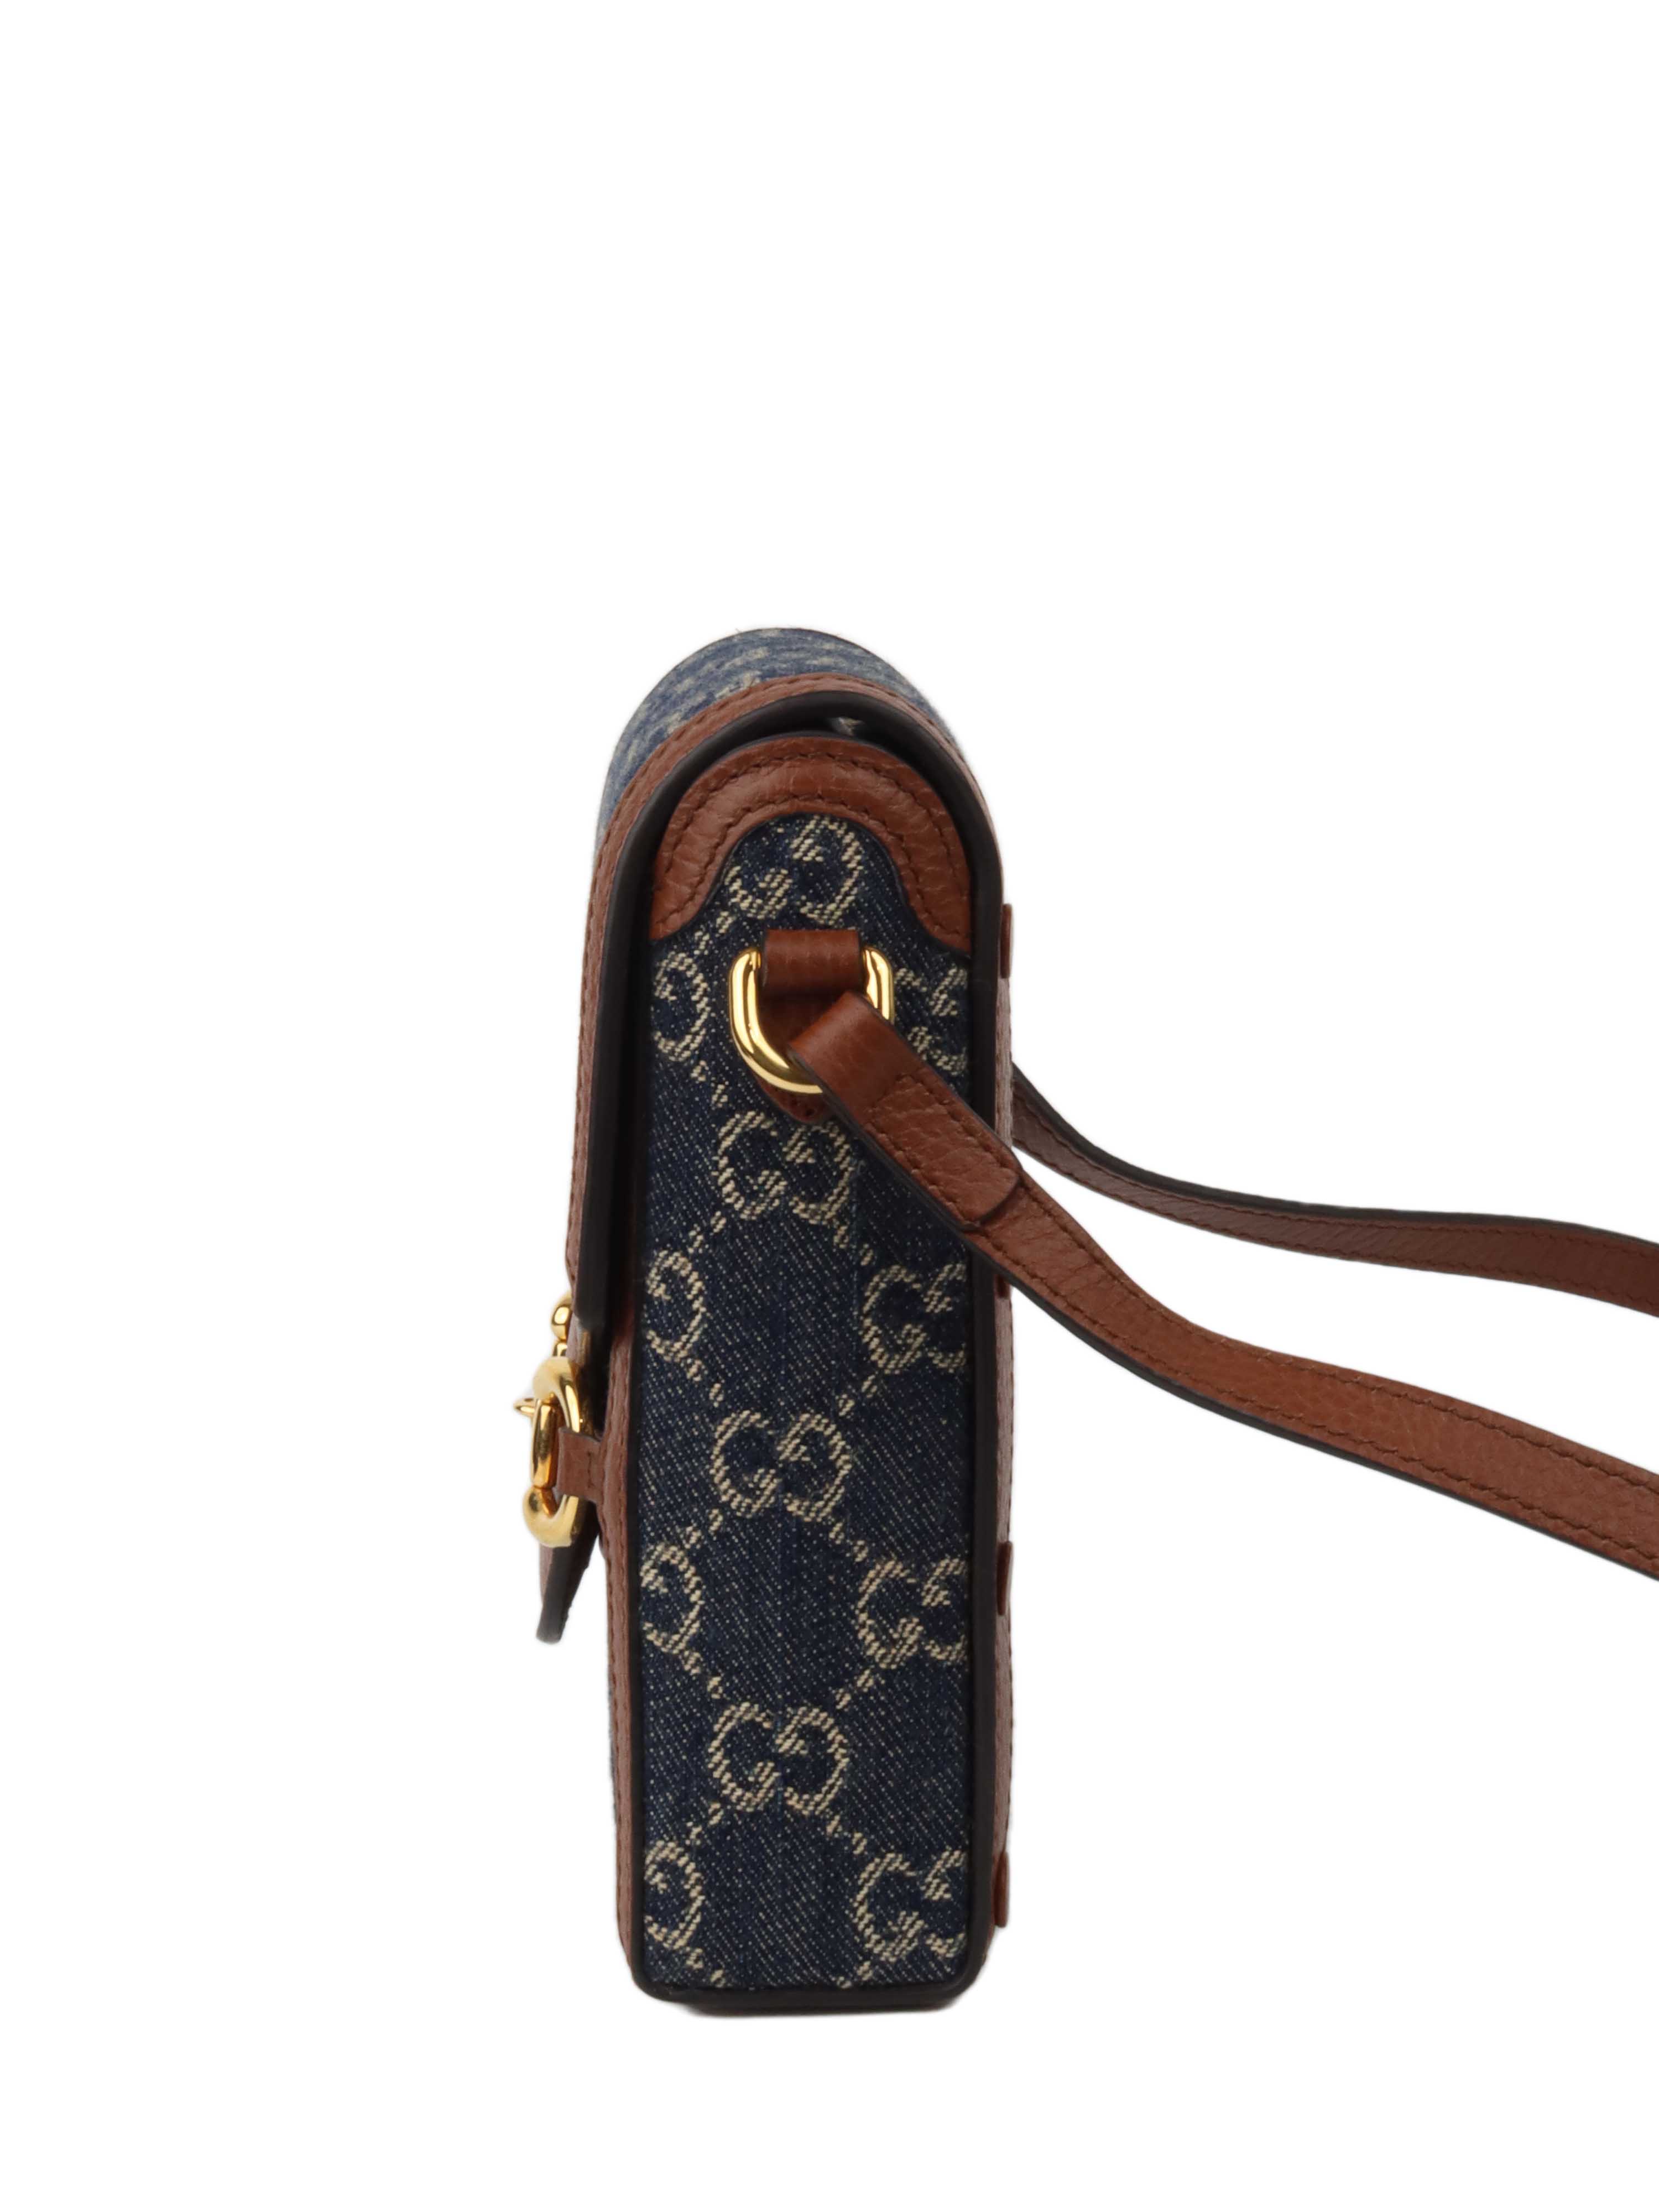 Gucci Denim 1955 Horsebit Phone Bag.